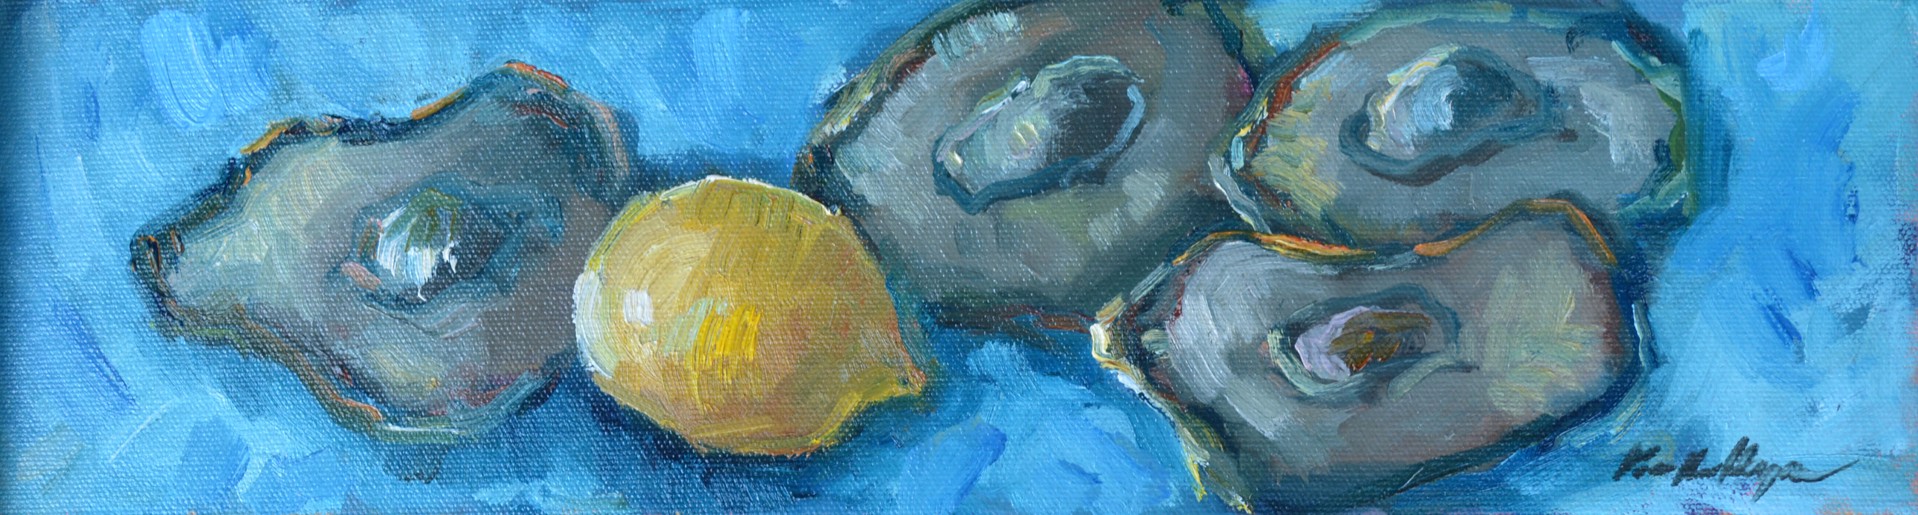 Oyster Season II by Karen Hewitt Hagan